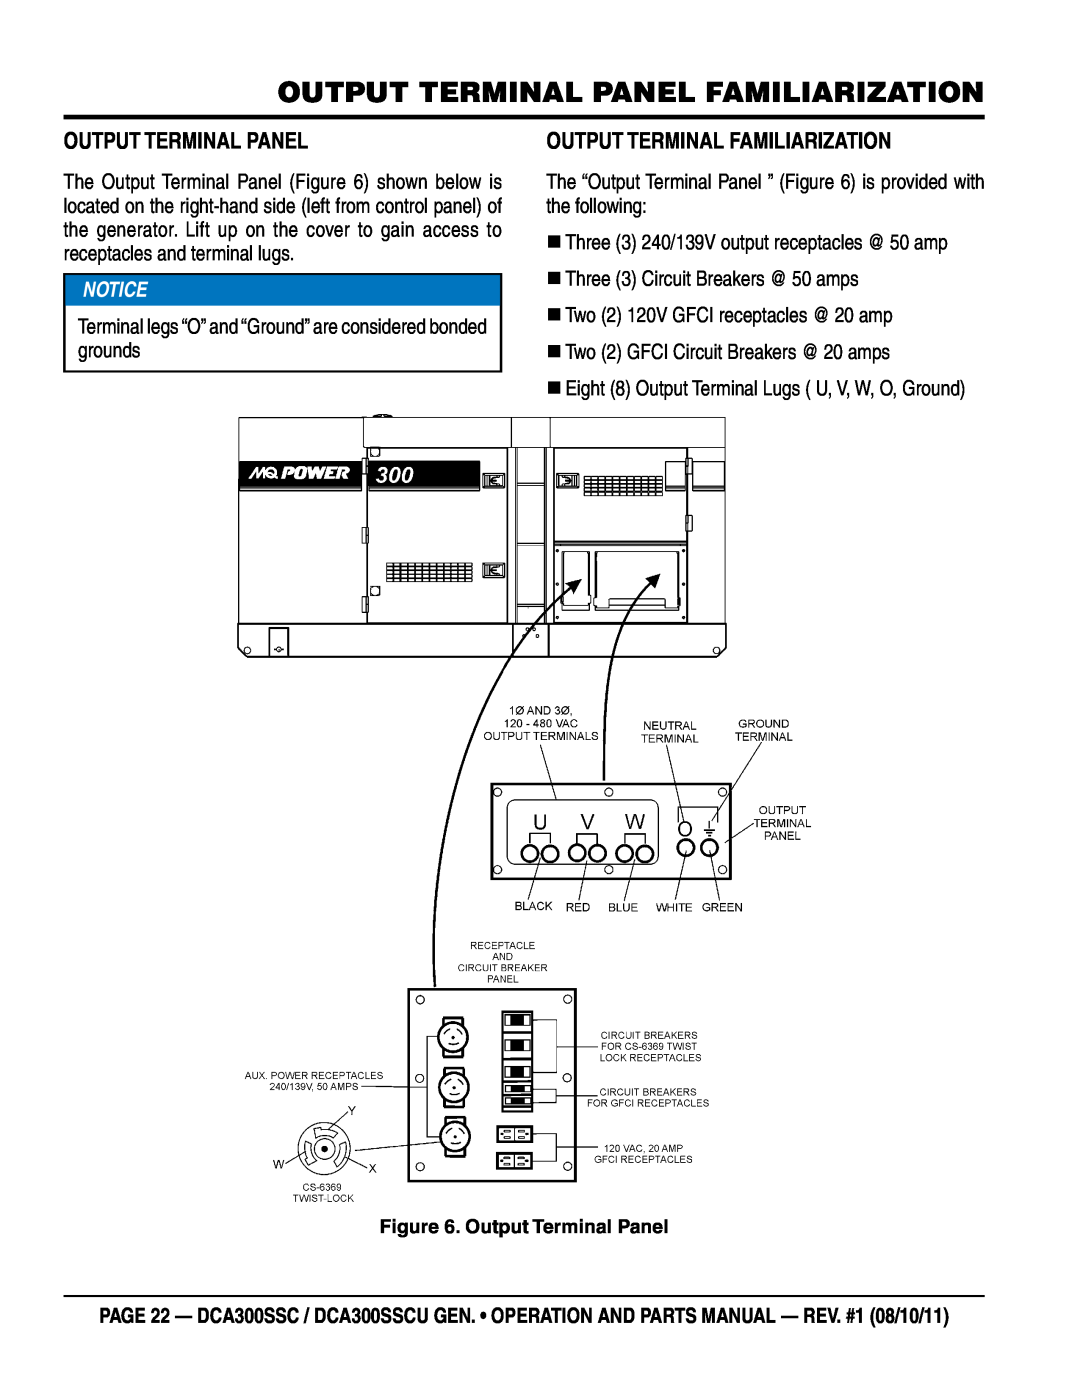 Multiquip DCA300SSCU manual Output Terminal Panel Familiarization, Output Terminal Familiarization 